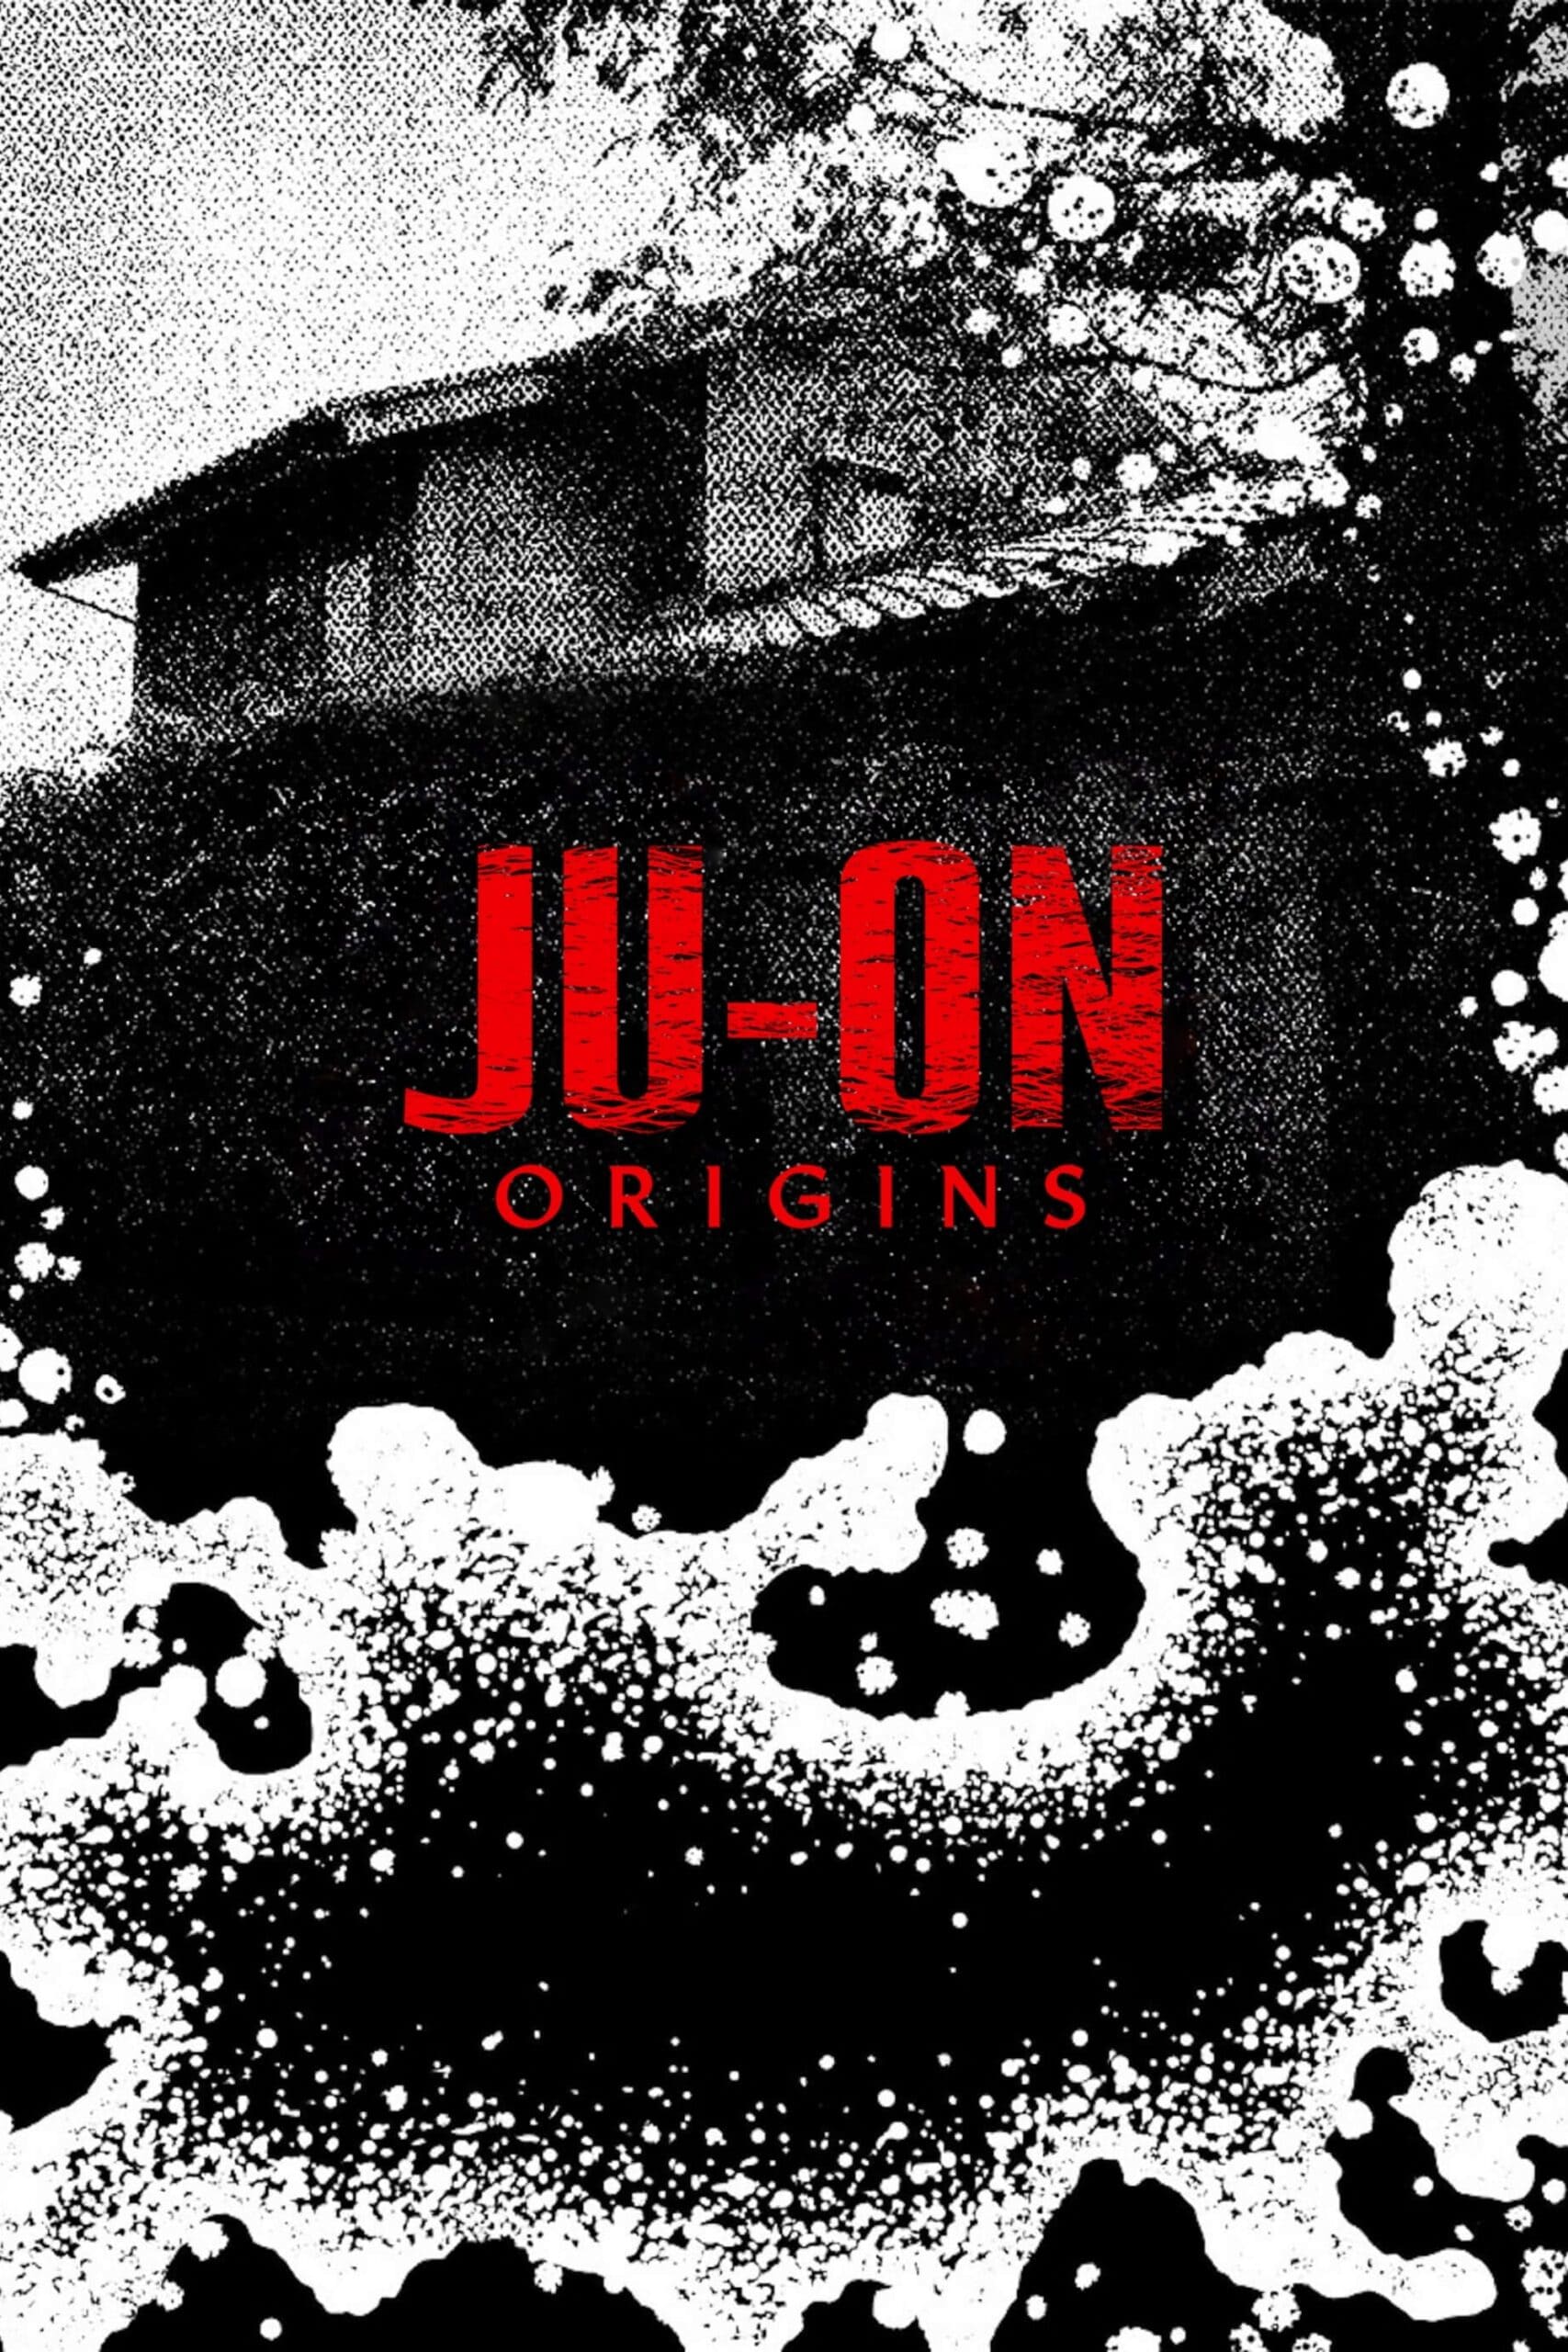 کینه: سرآغاز (Ju-on: Origins)